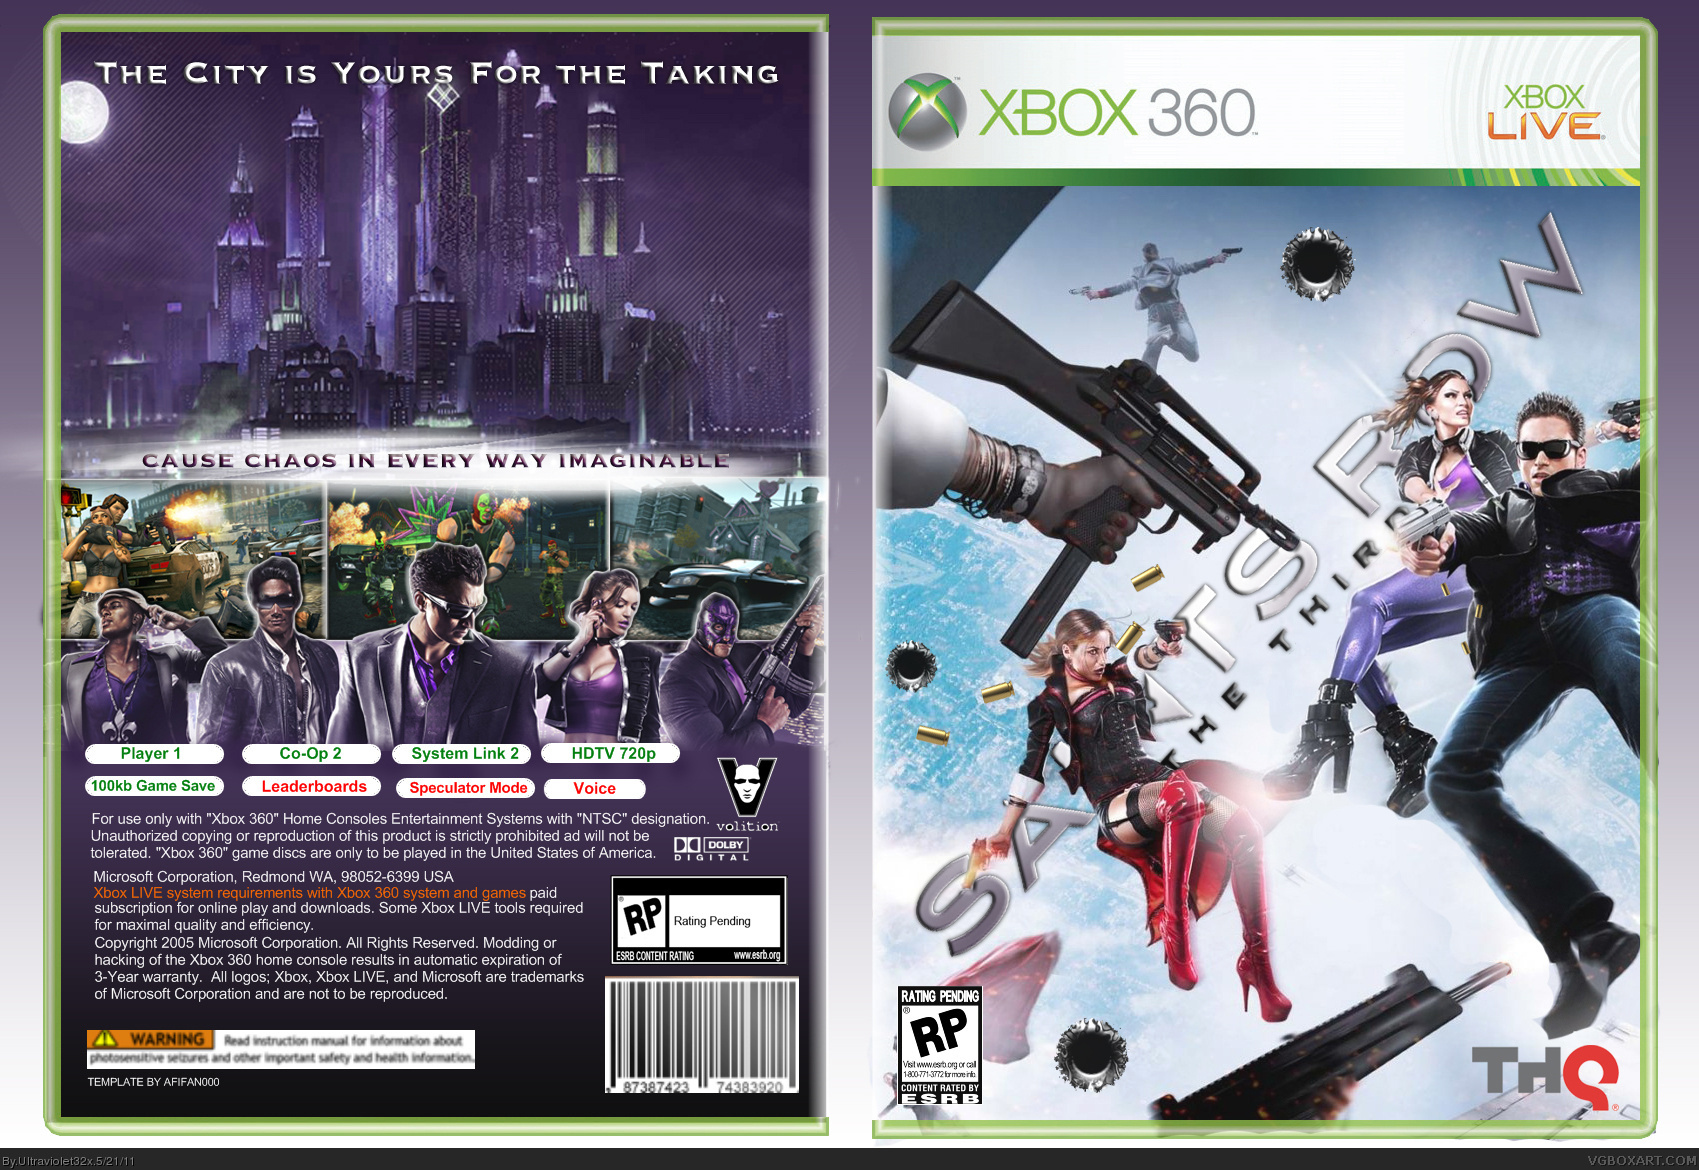 Saints Row: The Third (Microsoft Xbox 360, 2011) + Saints row 4 - Lot of 2  games 752919553176